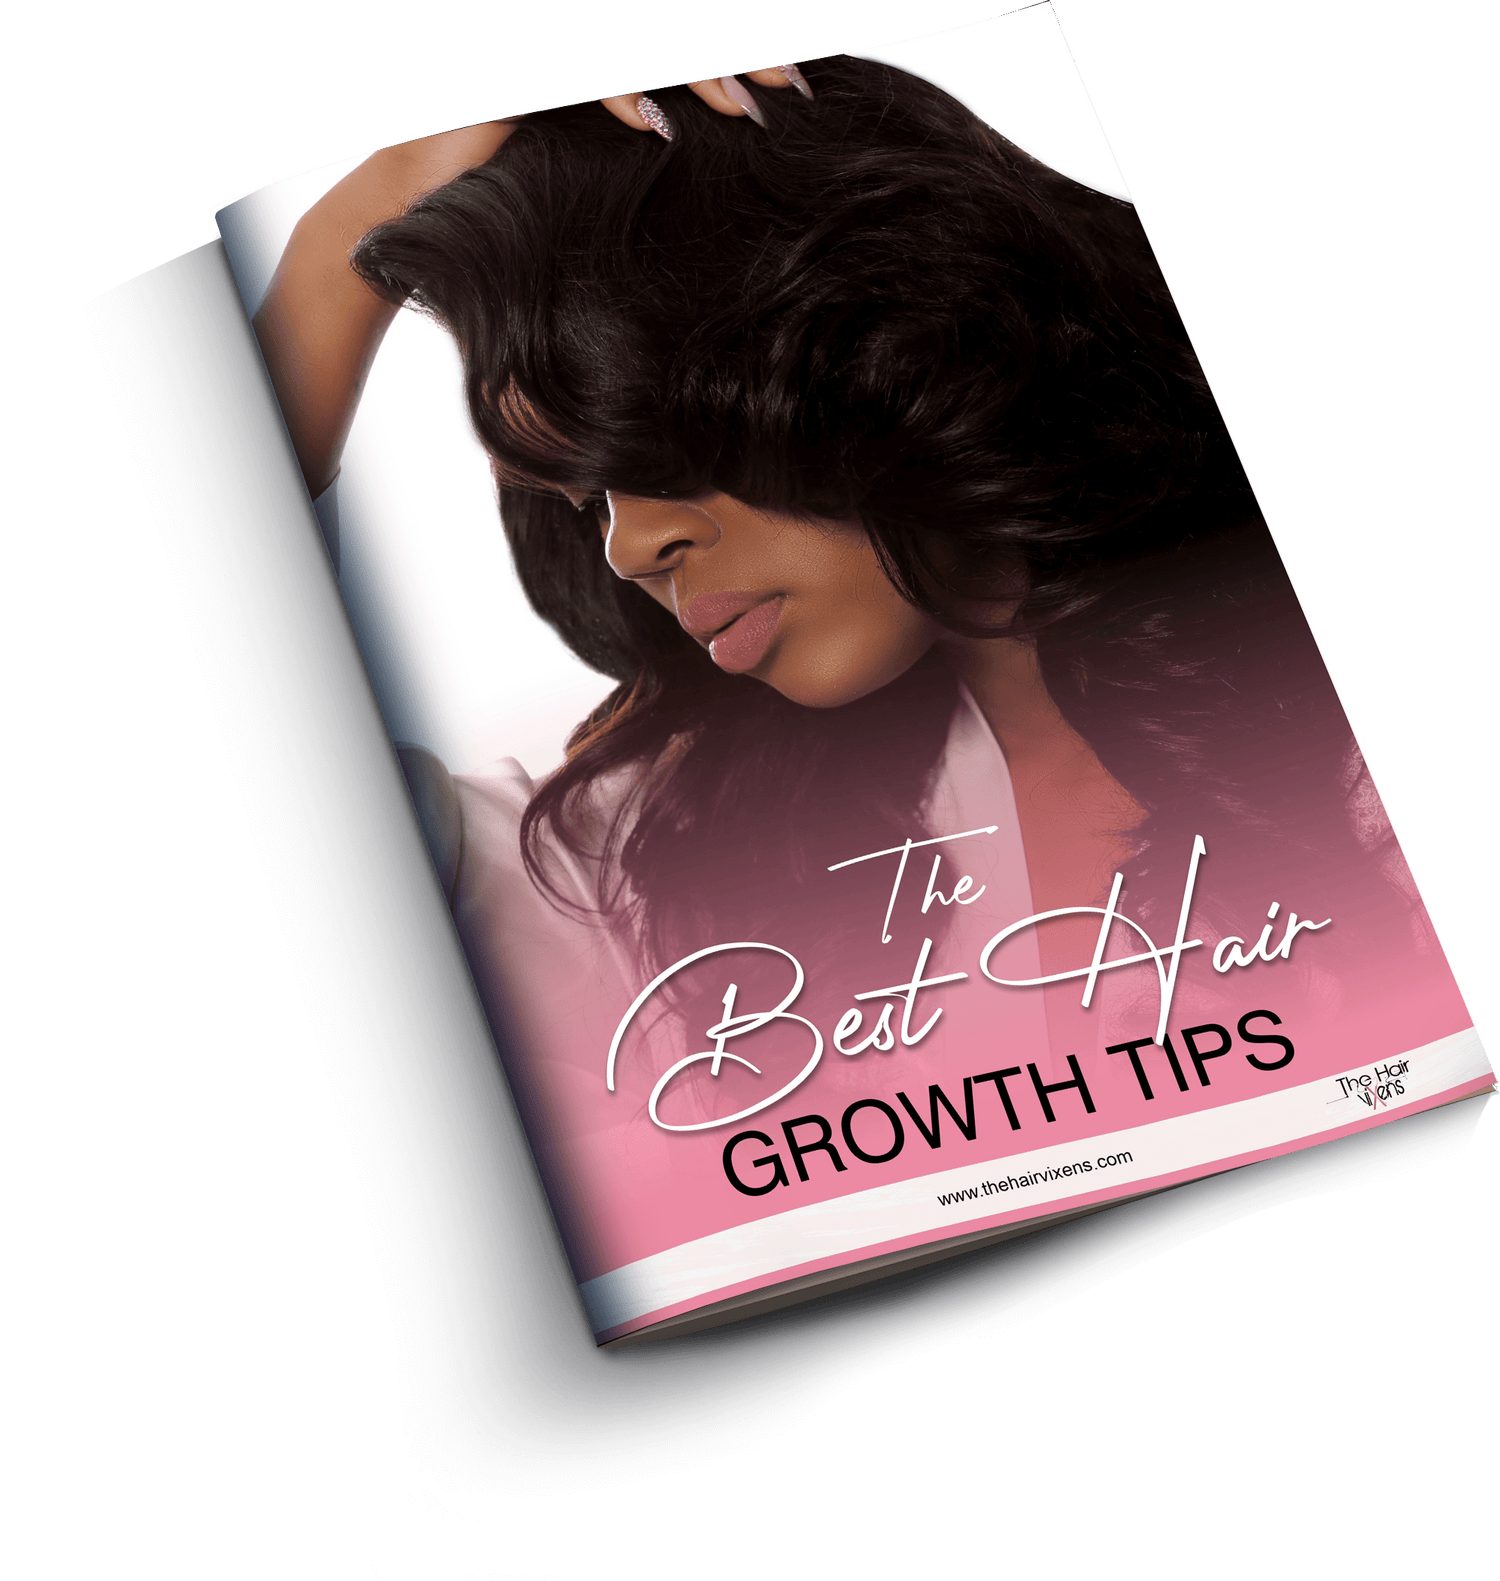 The Best Hair Growth Tips Ebook